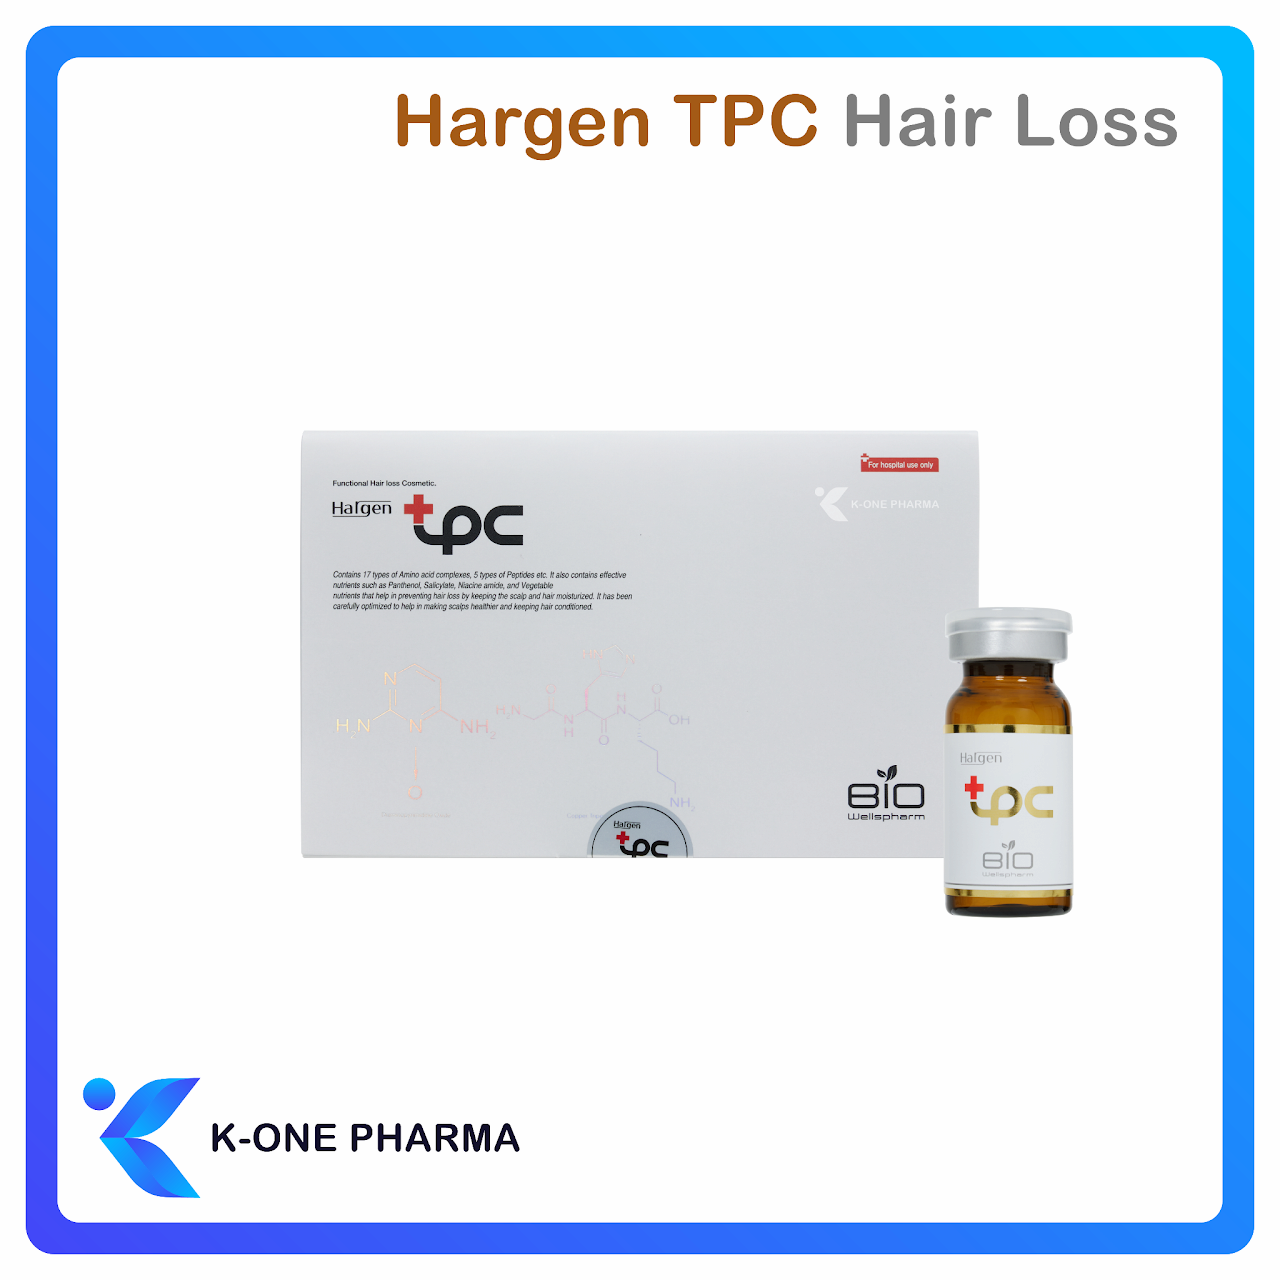 HARGEN TPC HAIR LOSS Nourish Hair Increase Thickness Shiny Healthier Hair